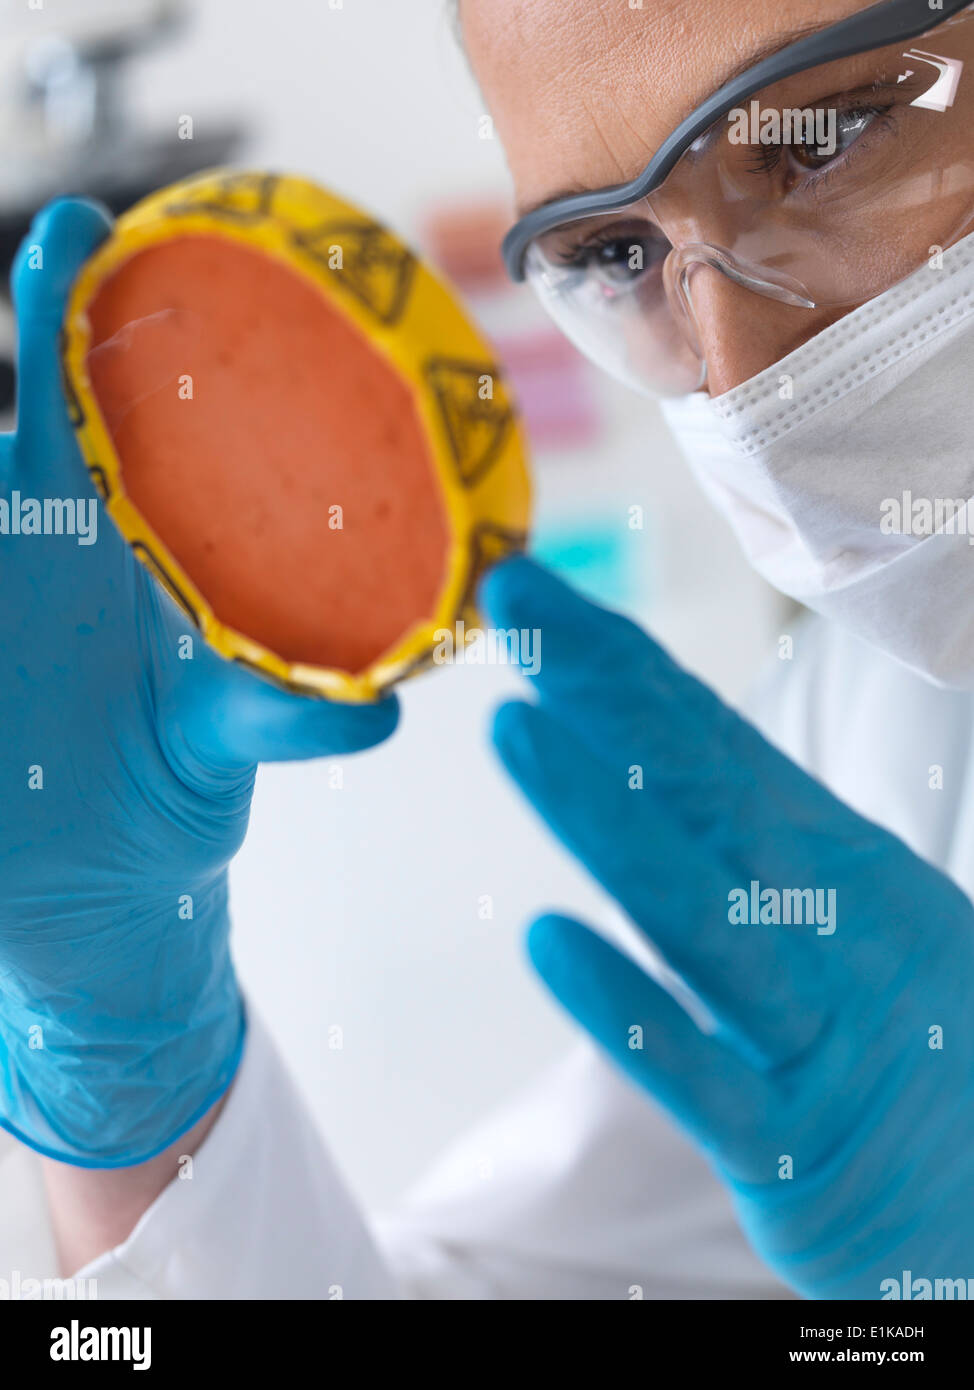 Female scientist holding petri dish with hazardous biological cultures. Stock Photo